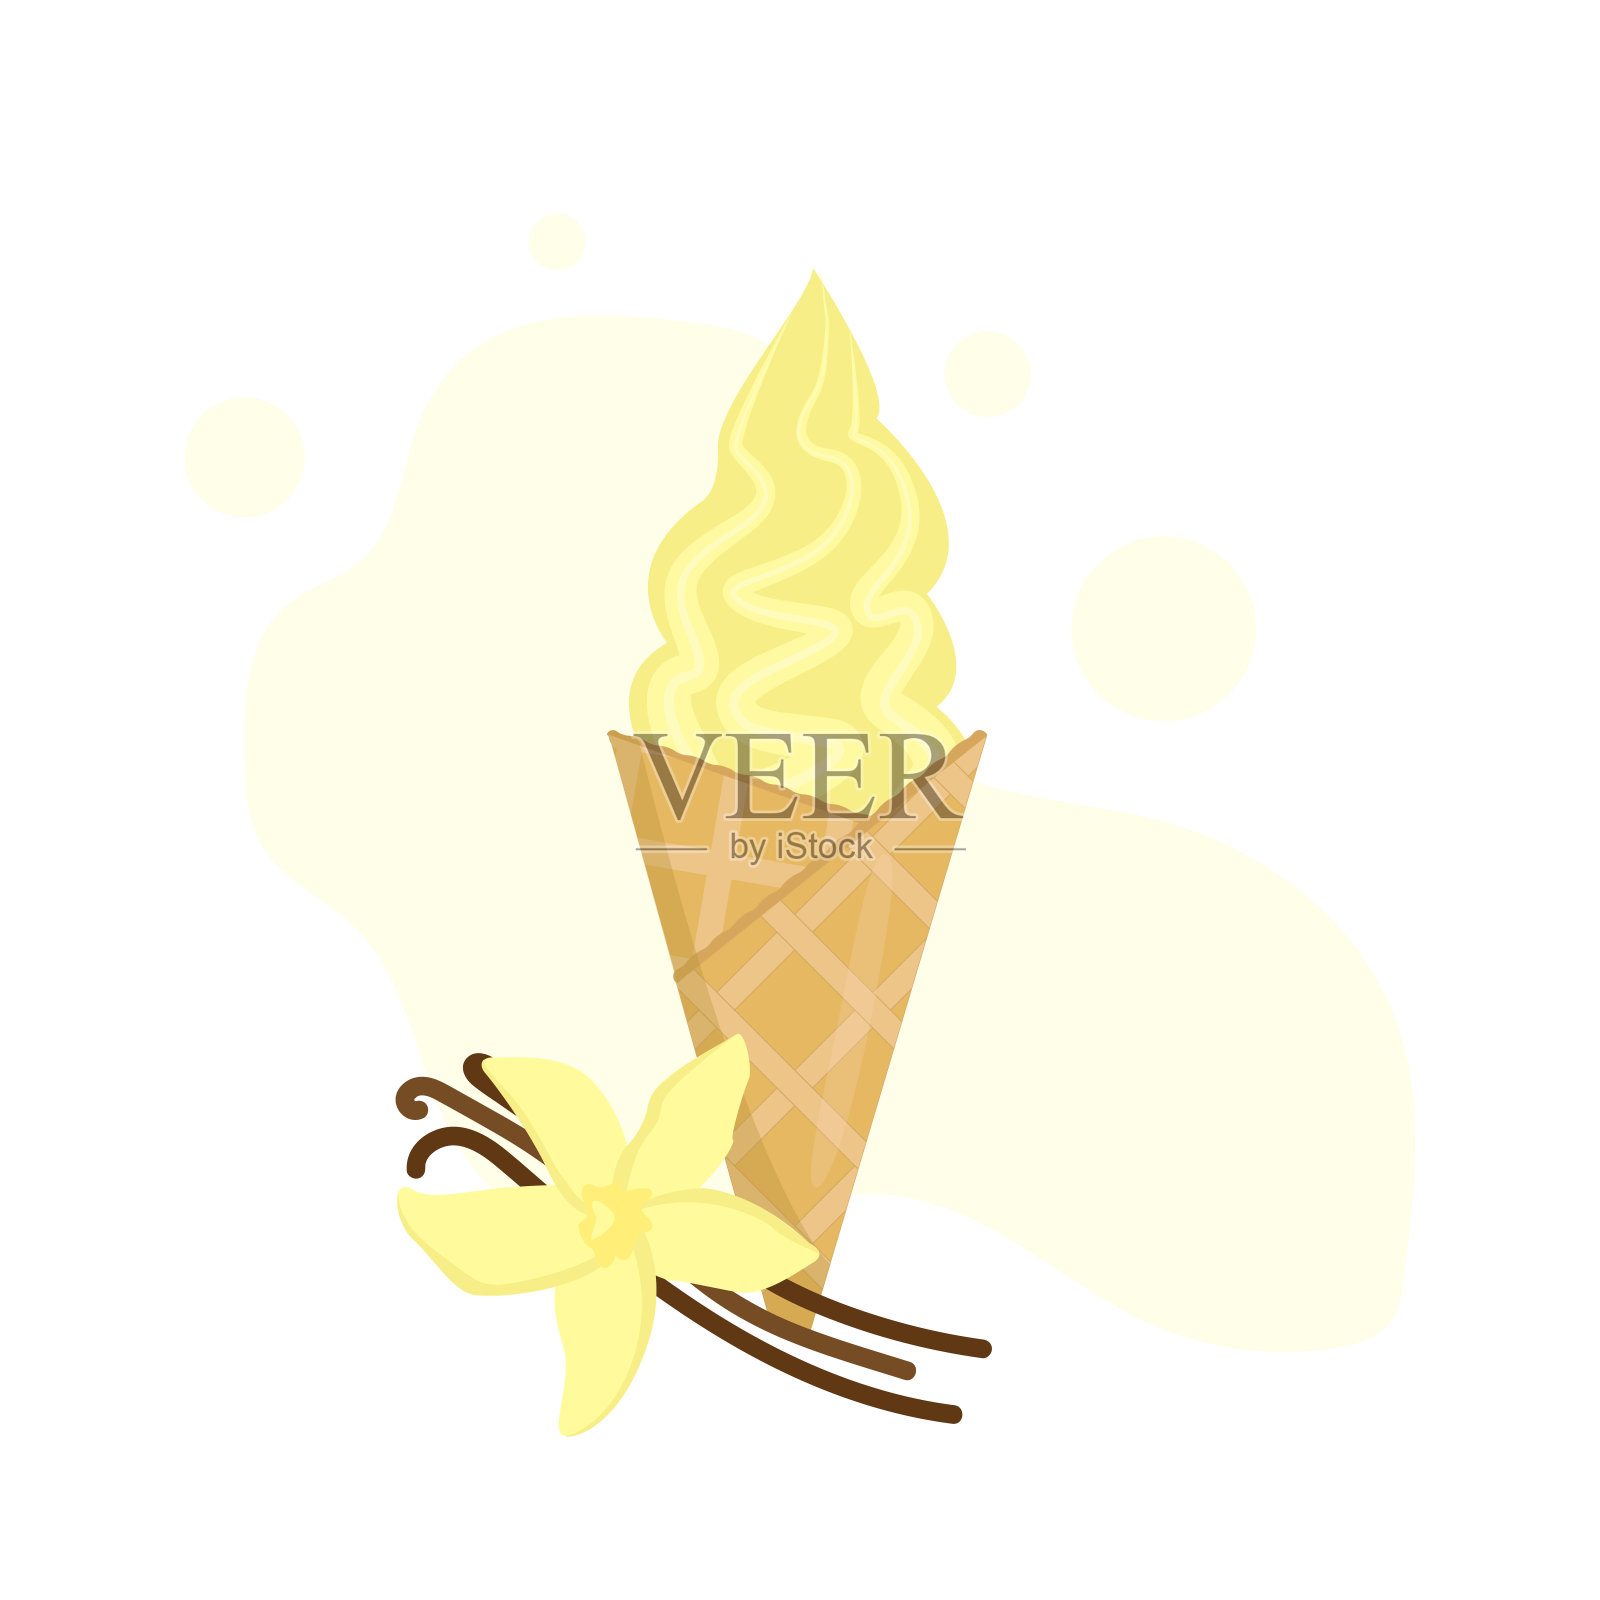 【食譜】香草冰淇淋(1):www.ytower.com.tw